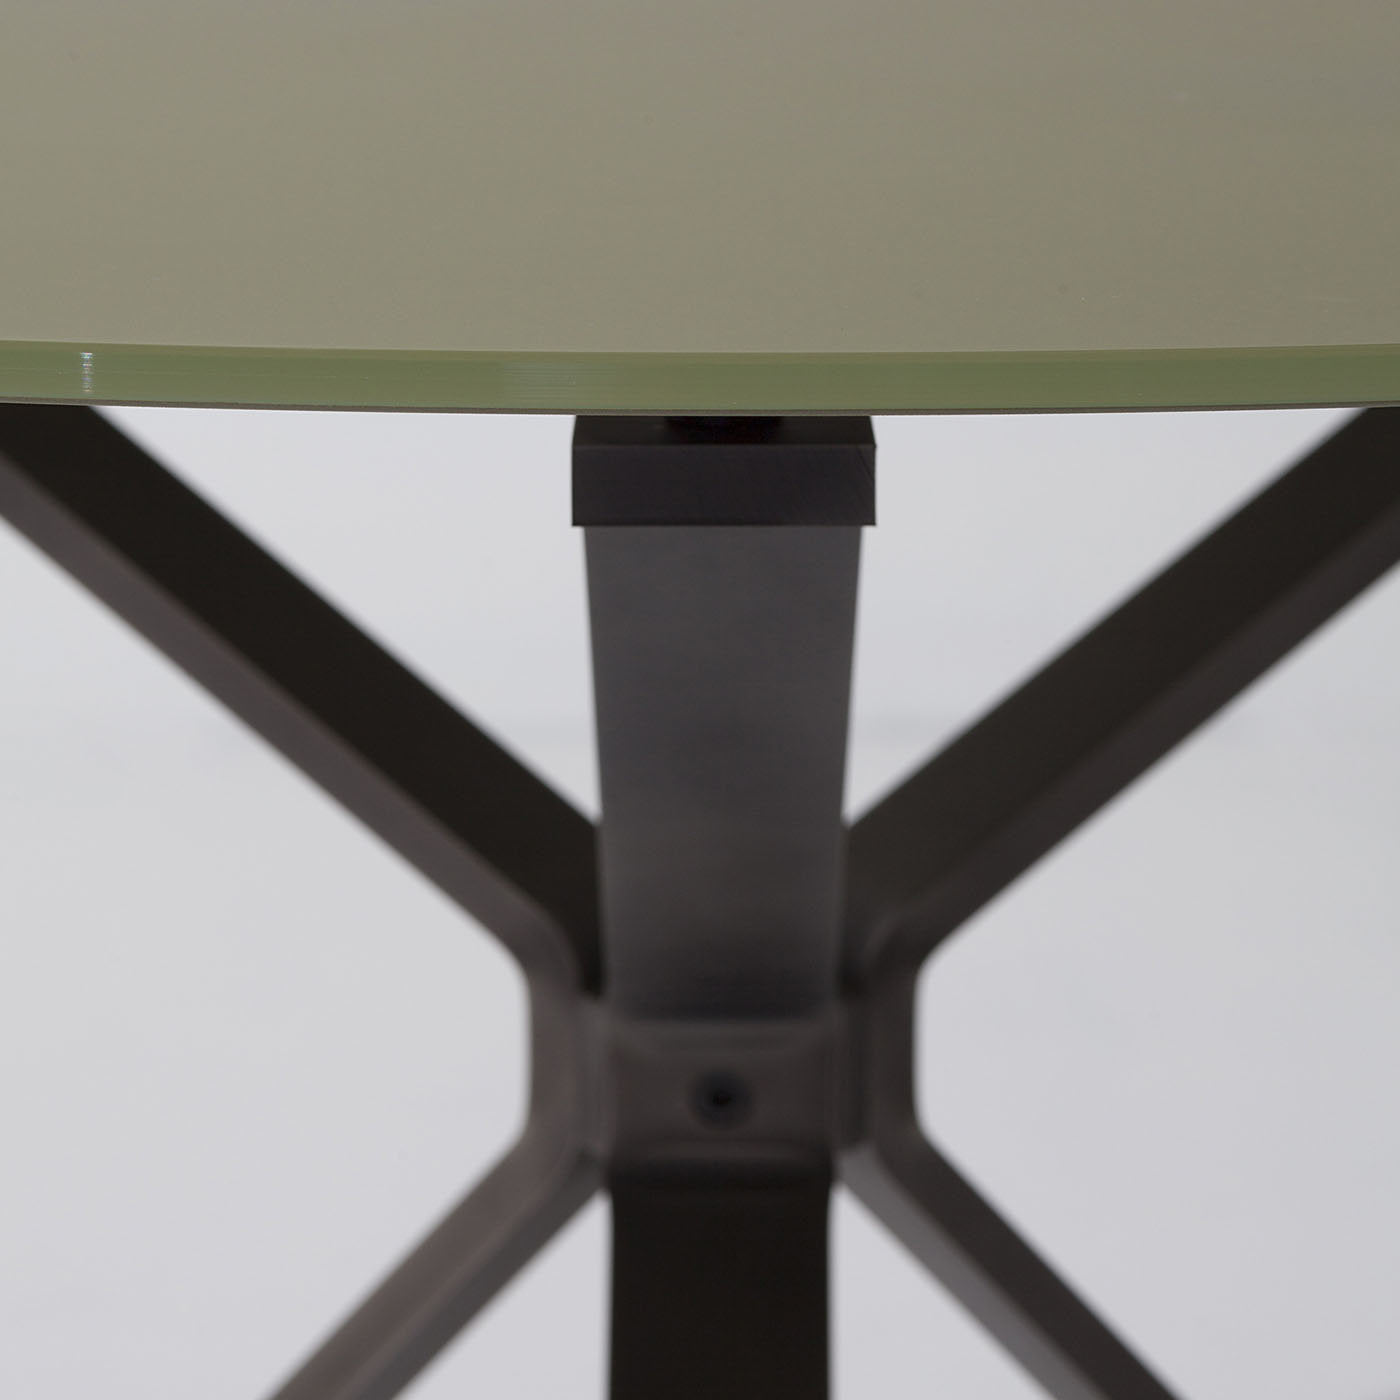 Revo Green 100 Coffee Table by Giovanni Giacobone + Massimo Roj Progetto CMR - Alternative view 2